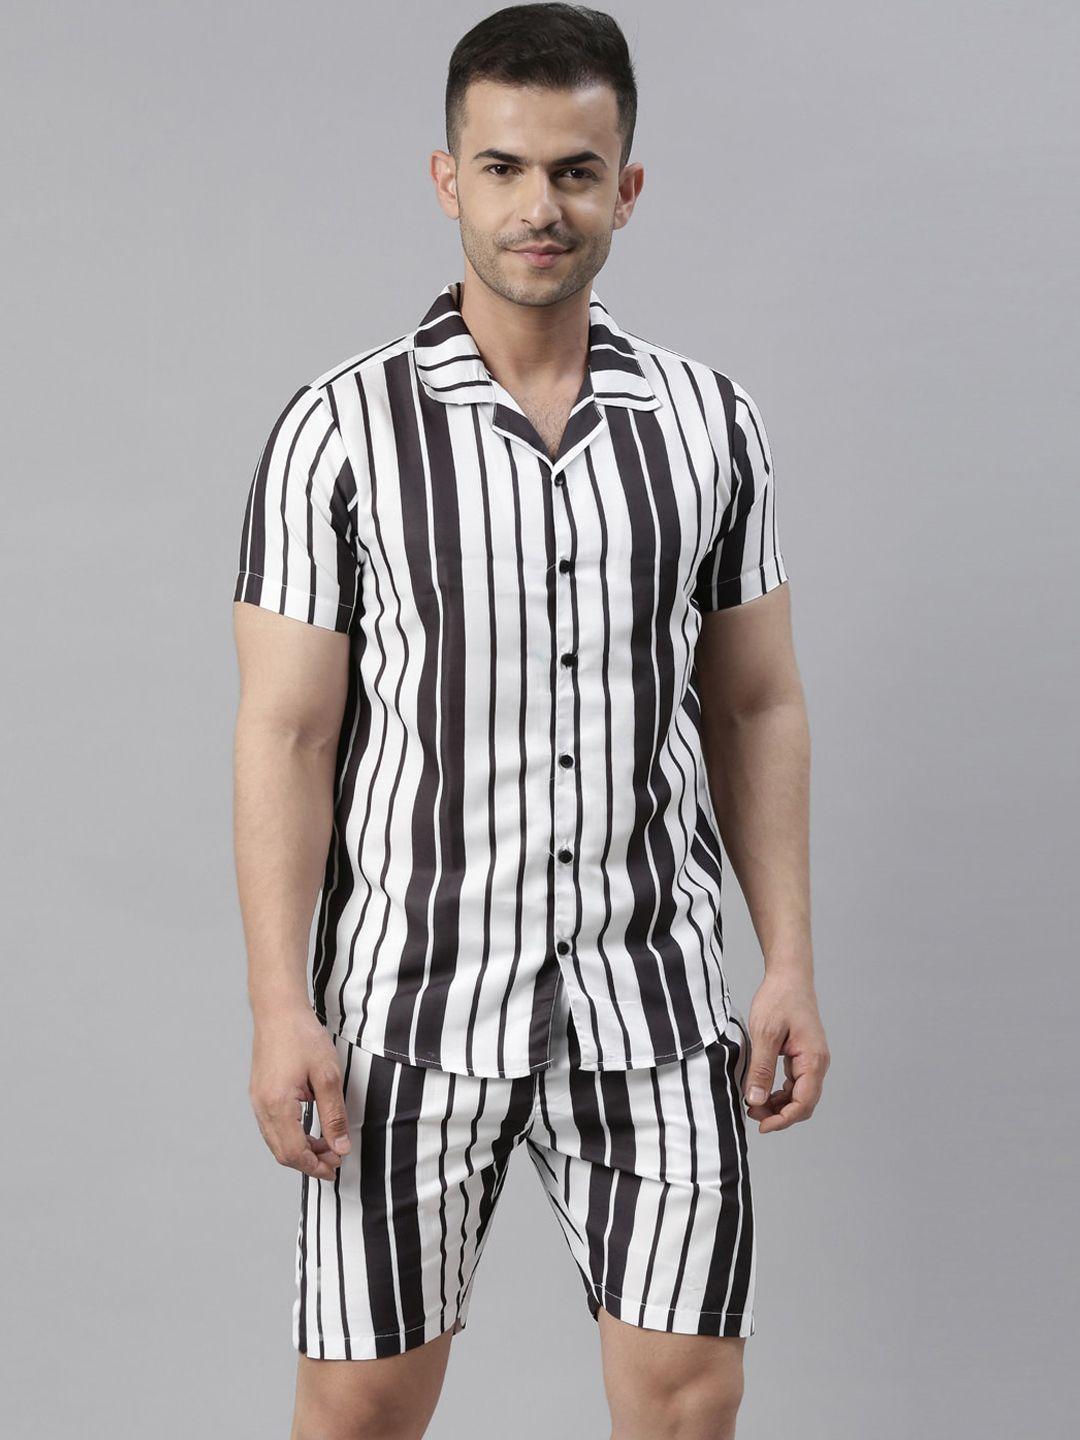 bushirt men white & black striped night suit